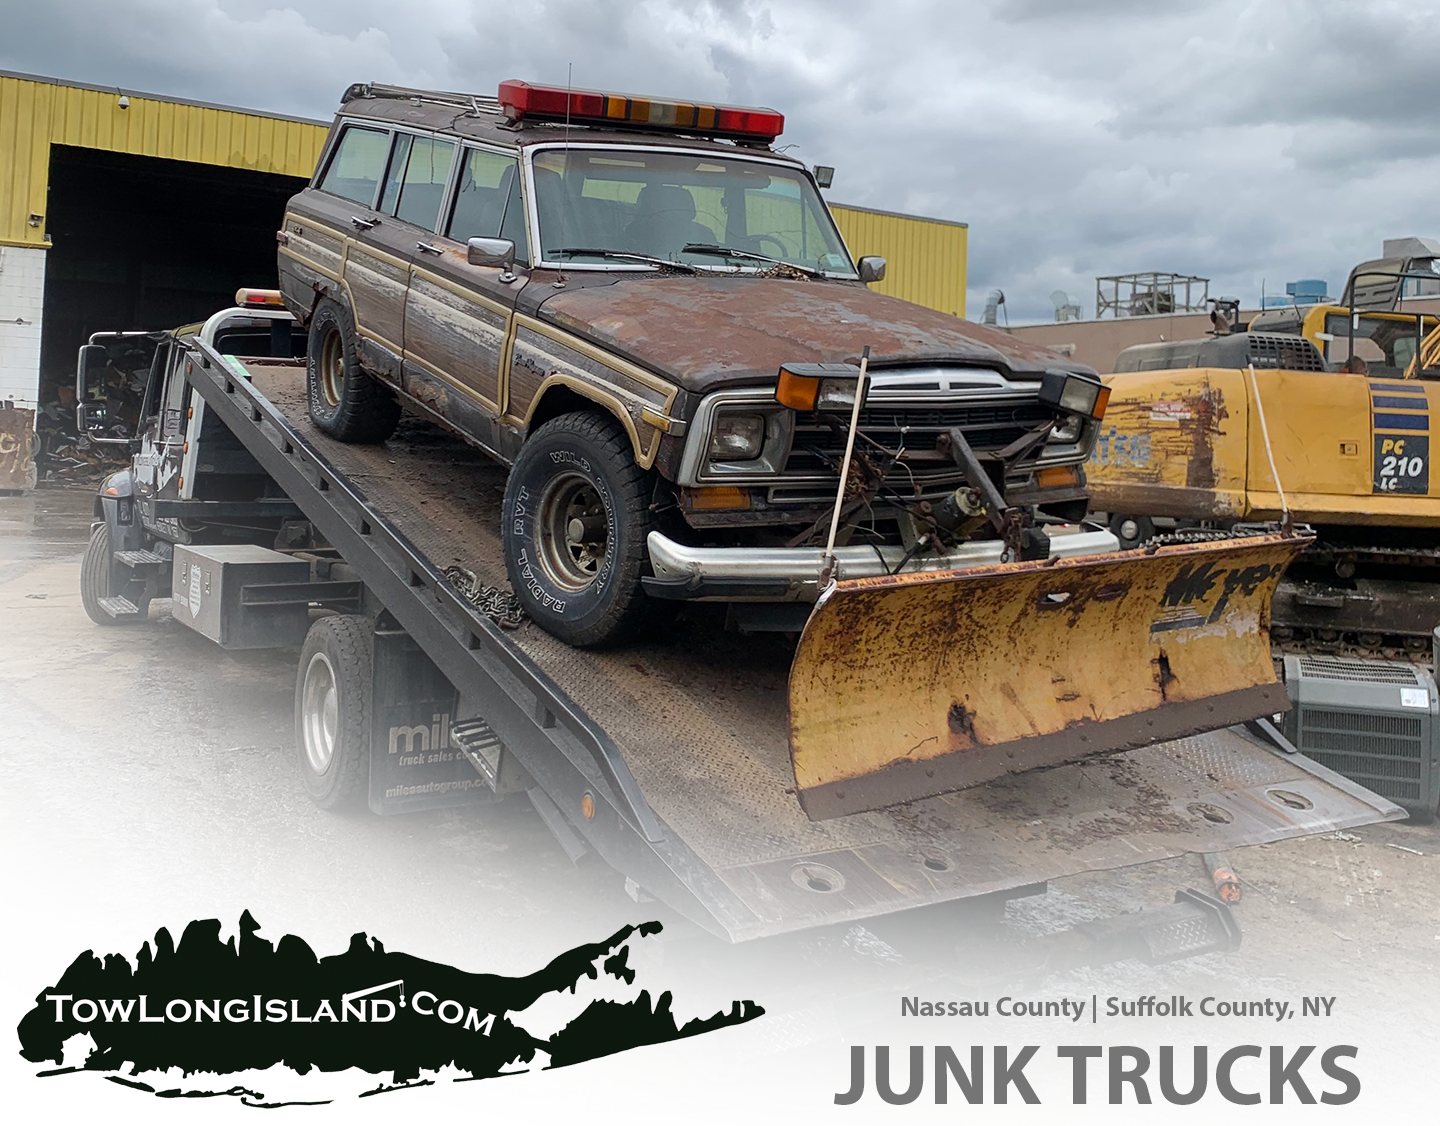 Junk Trucks Photo | TowLongIsland.com